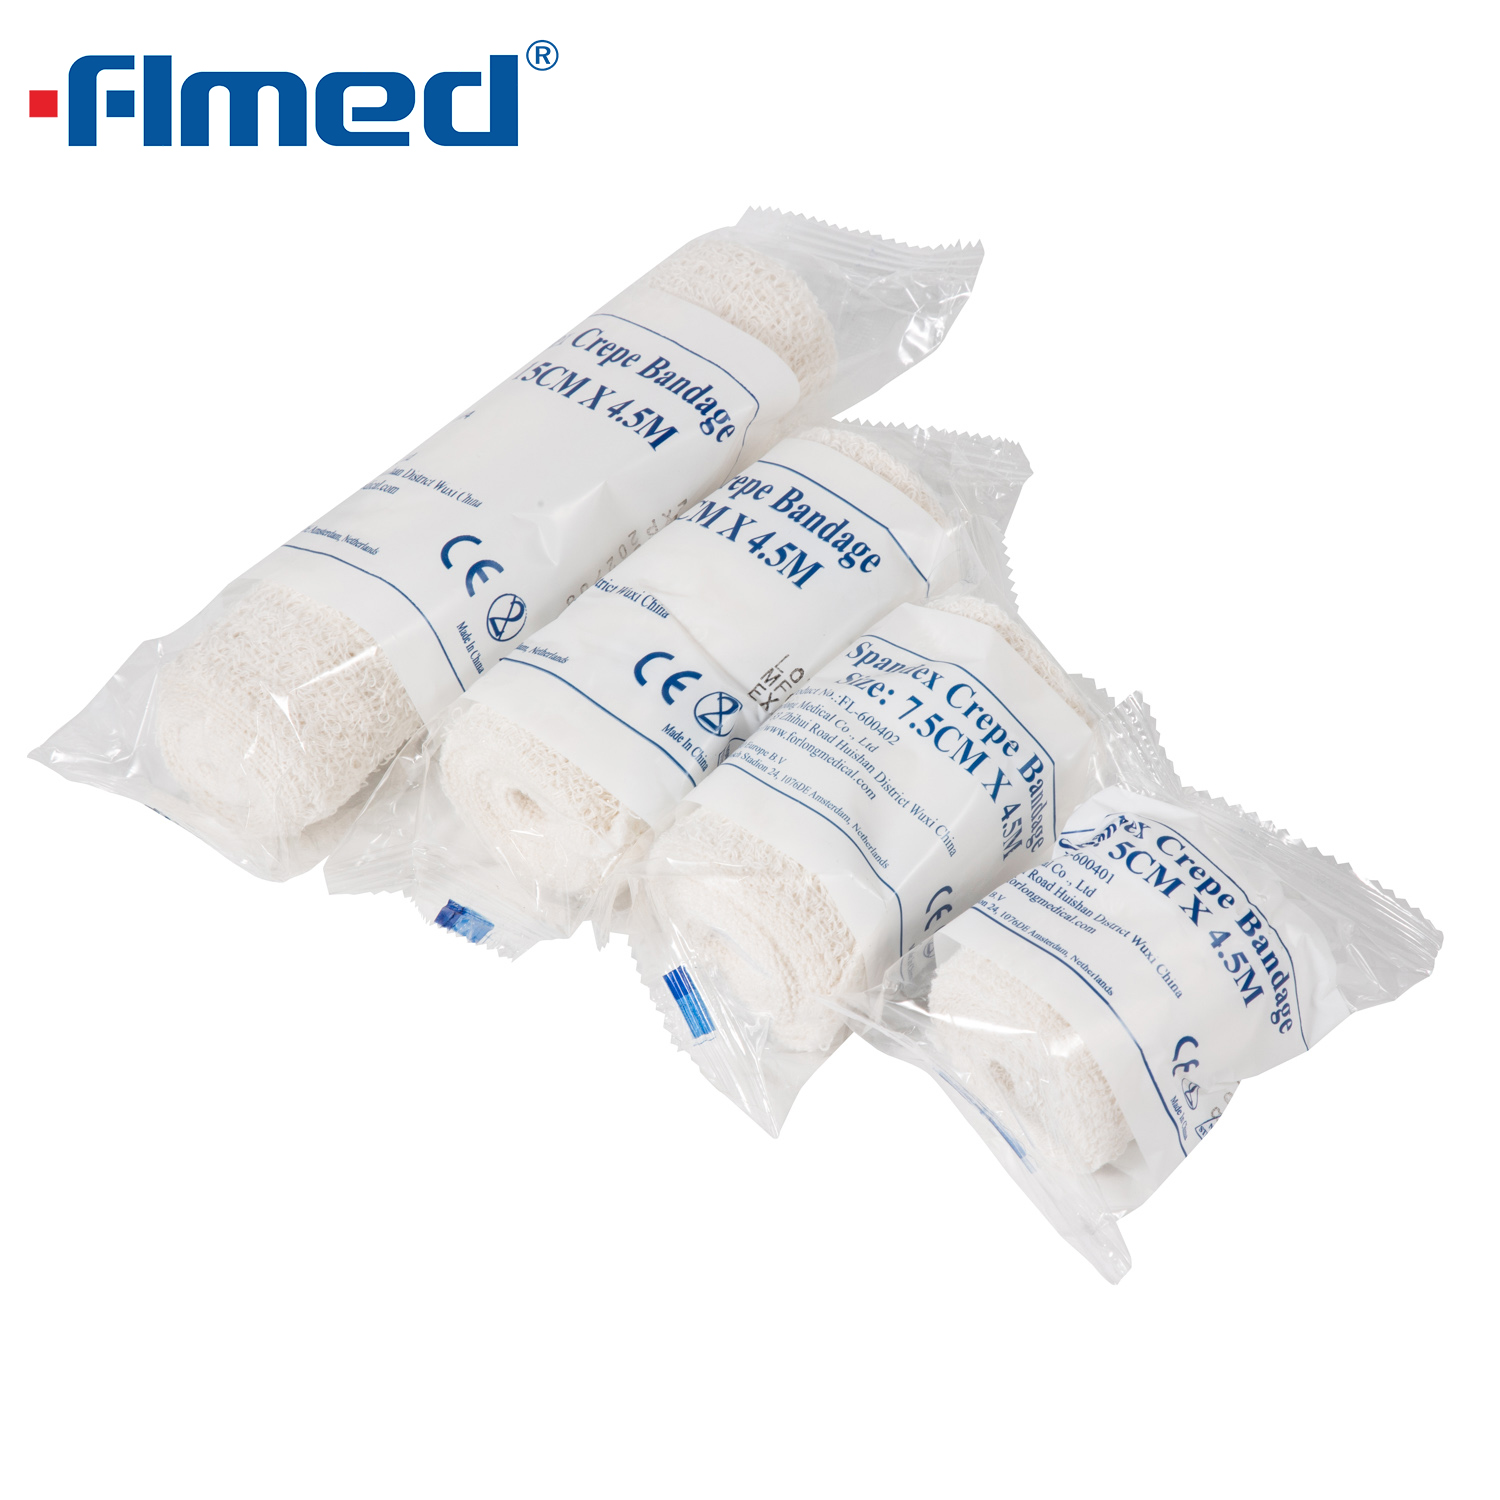 100% High-grade Cotton Crepe Bandage Medium 5cm